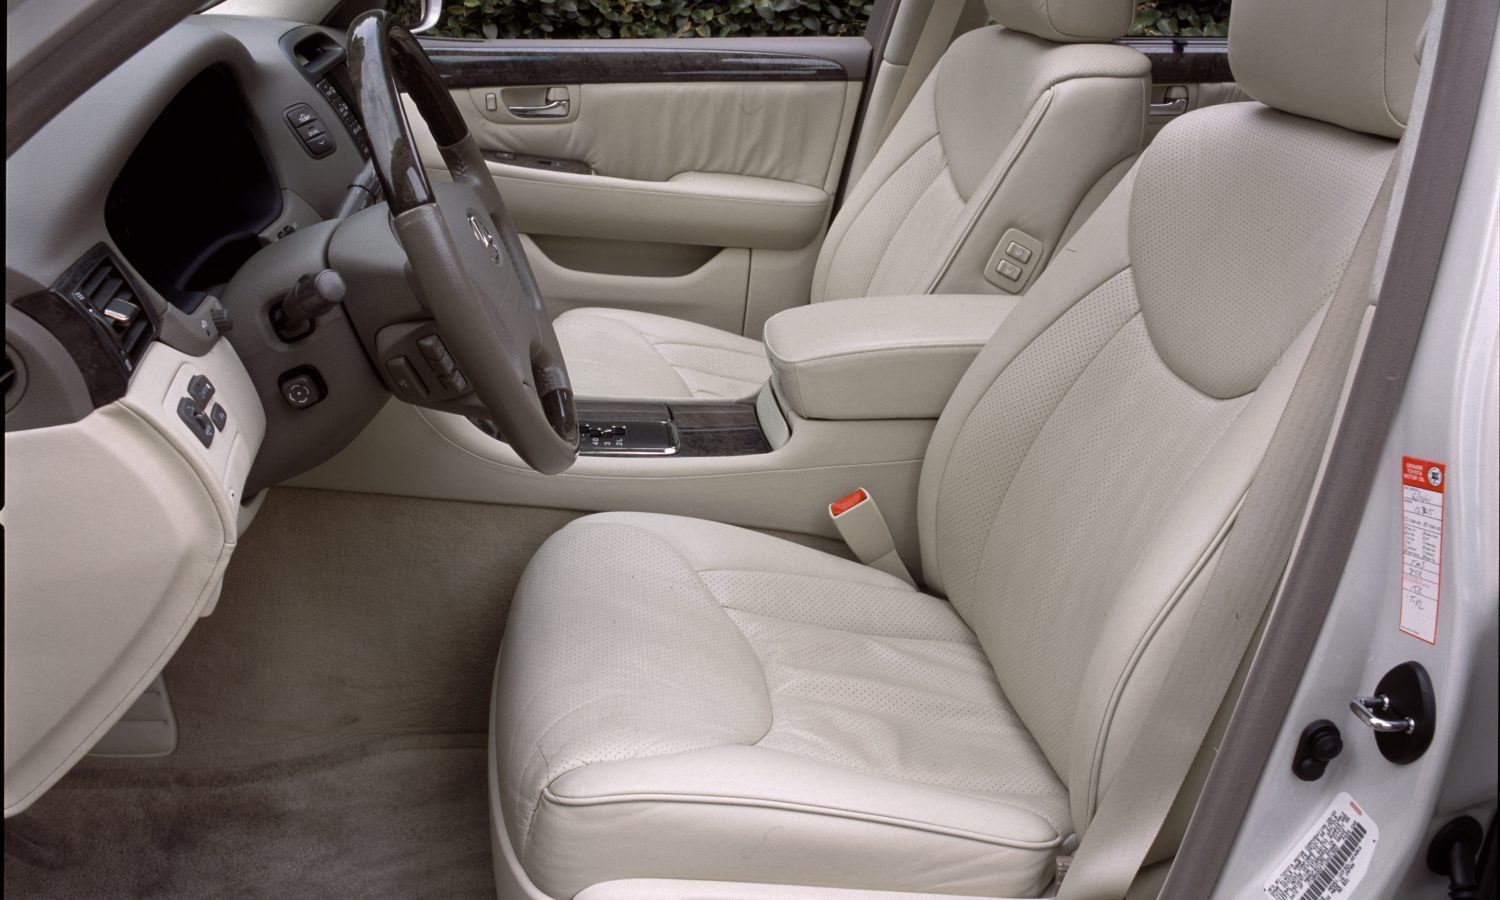 2001-2003 Lexus LS 430 interior 035 - Lexus USA Newsroom